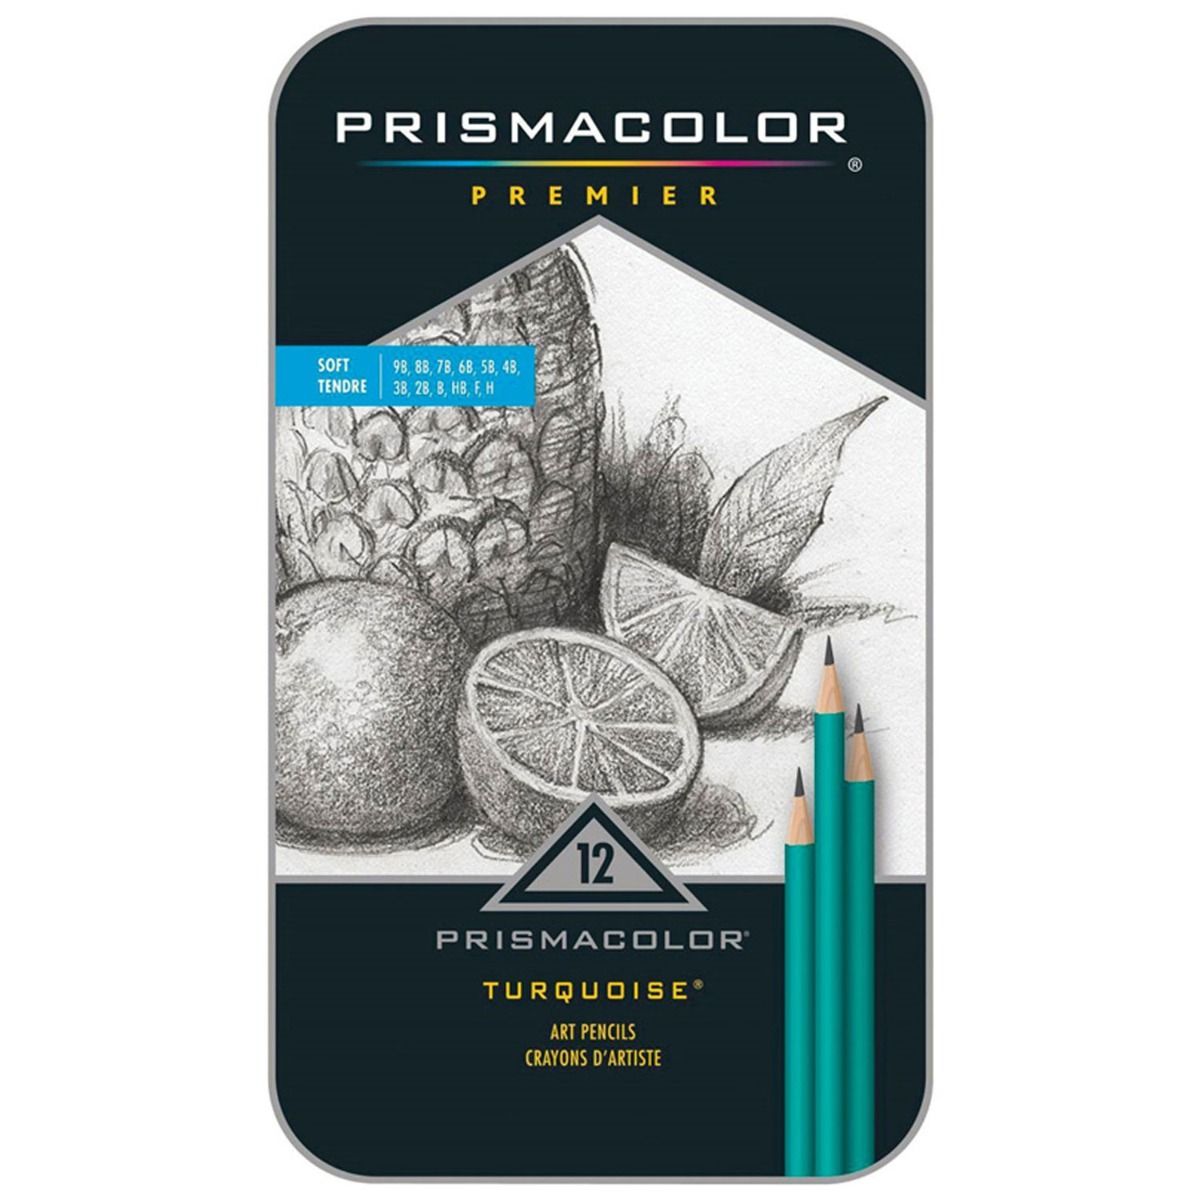 Prismacolor Premium Turquoise Drawing Pencil Set of 12